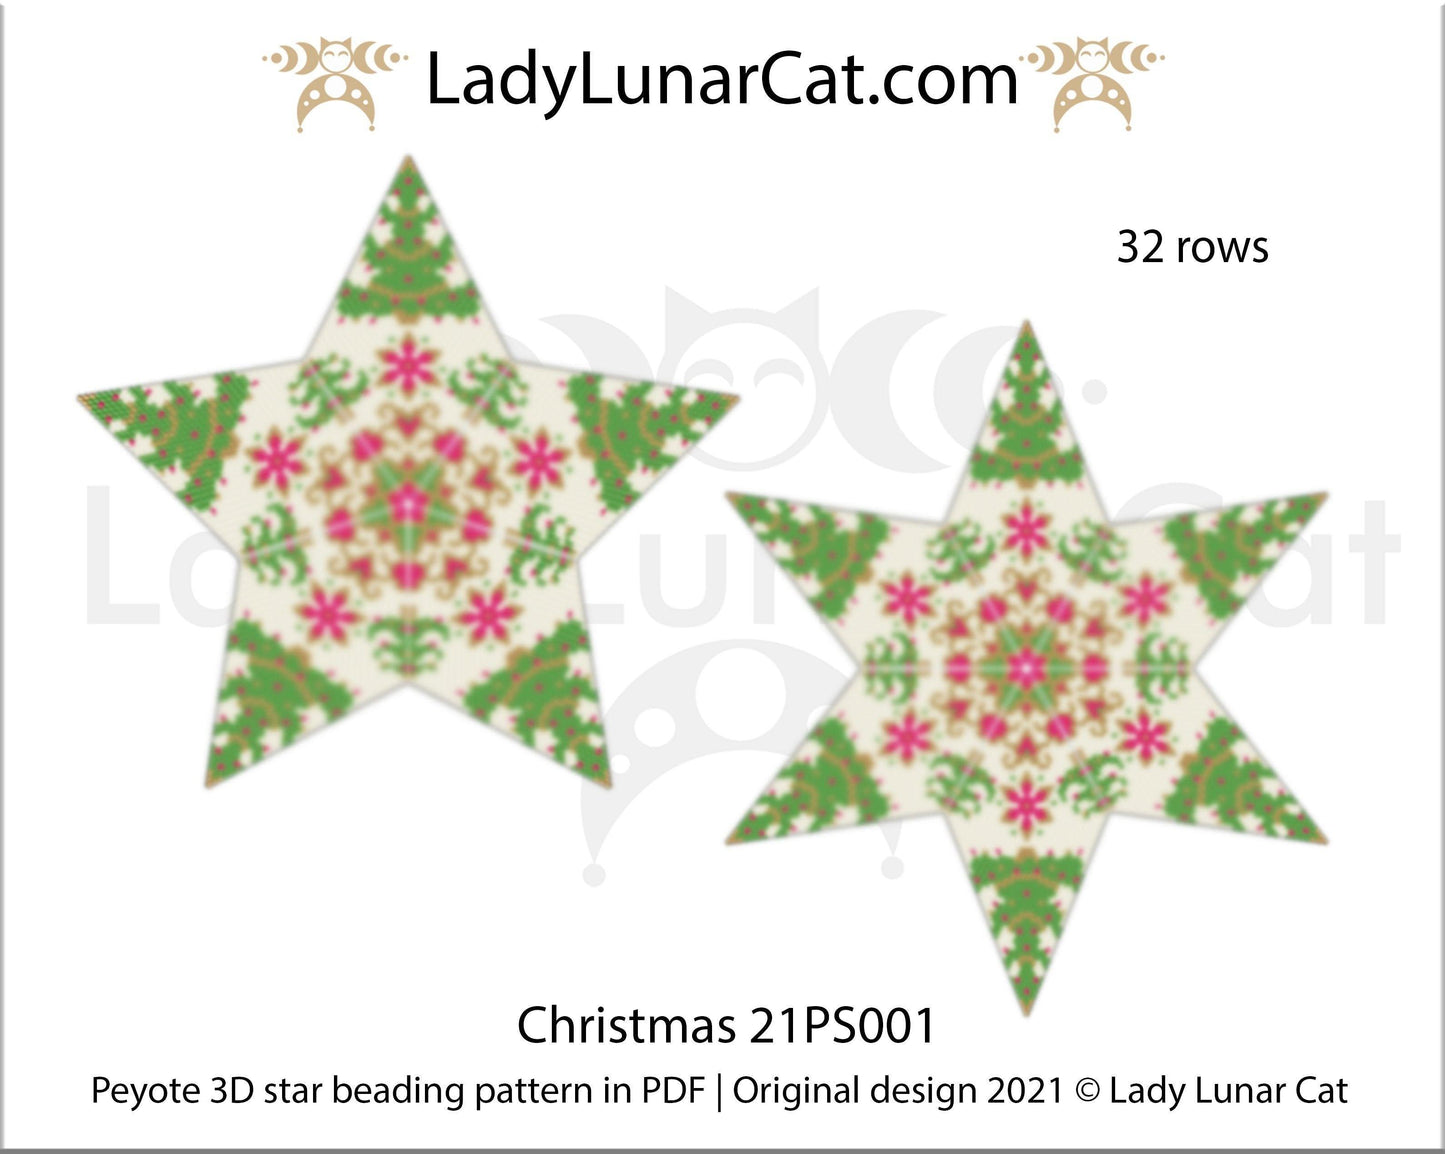 Beaded star pattern for beadweaving Christmas 21PS001 LadyLunarCat